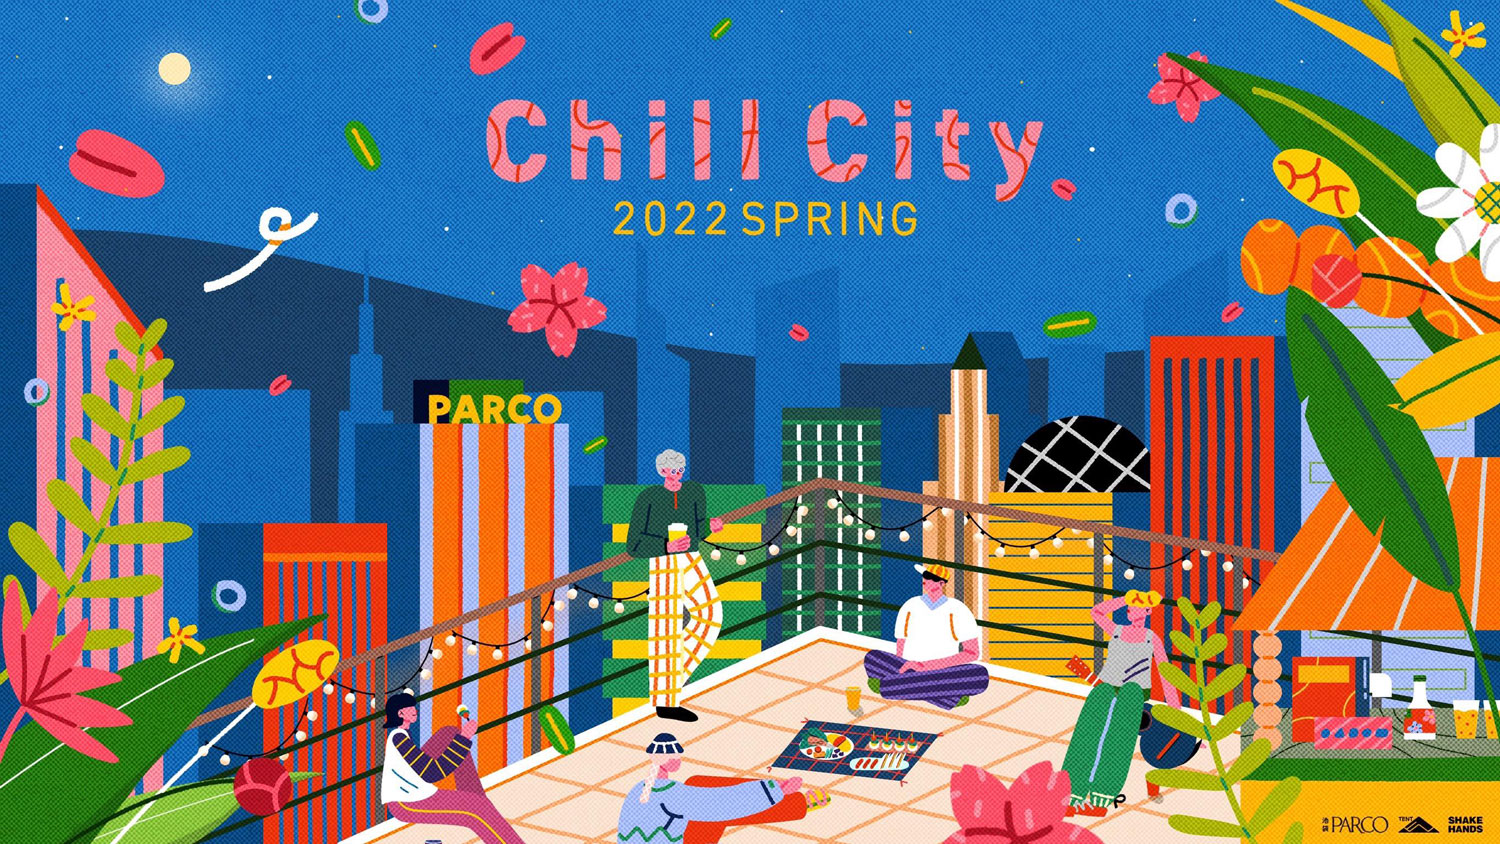 「ChillCity 2022 Spring in IKEBUKURO PARCO」